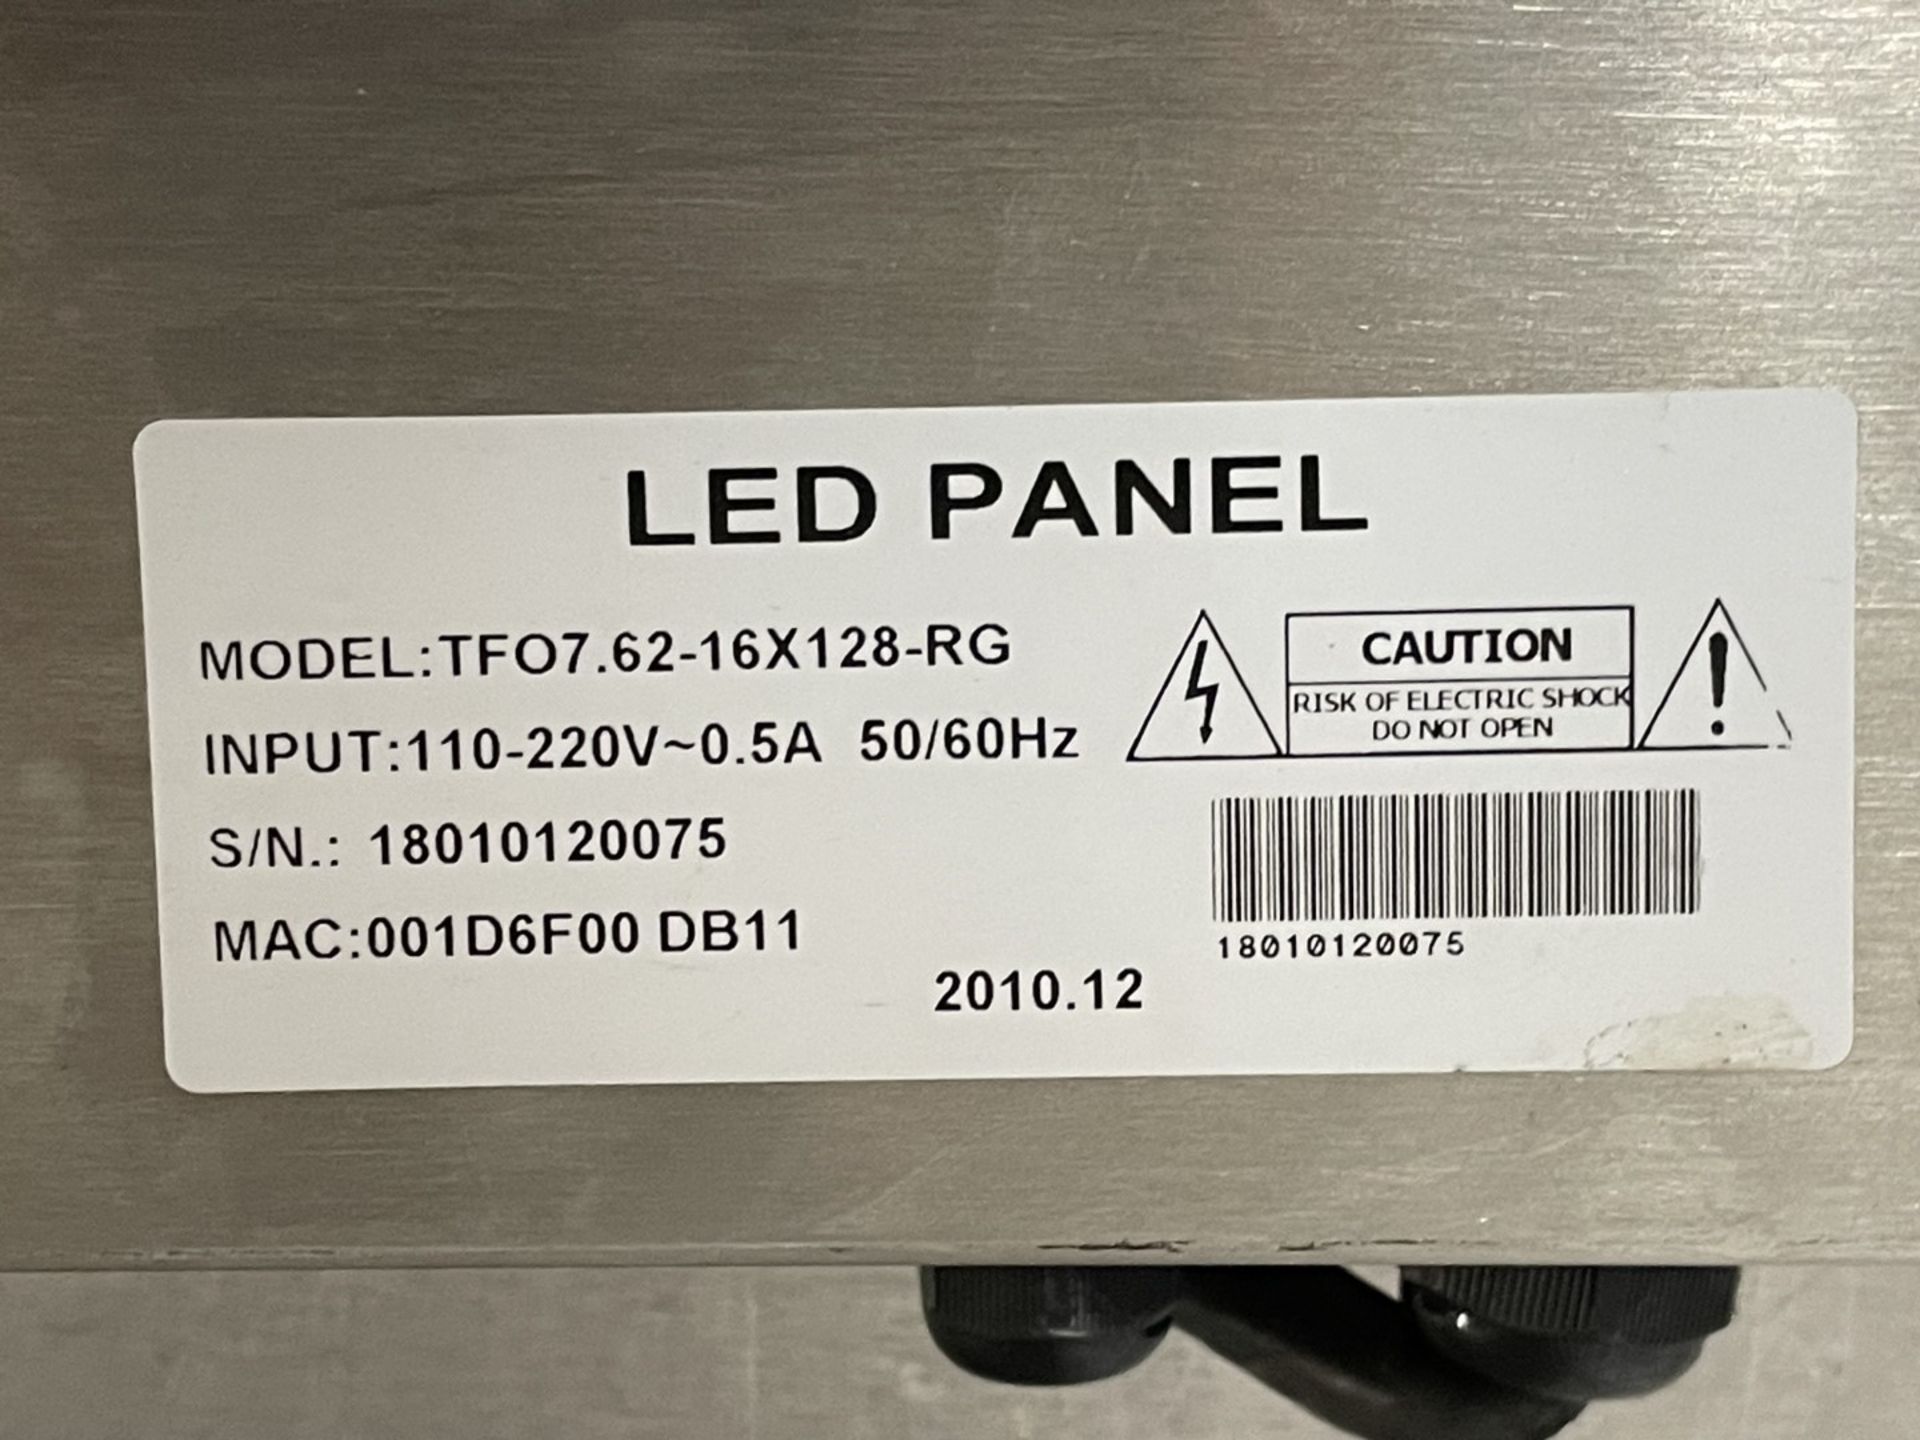 Shoplogix LED Panel, Model TFO7.62-16X128-RG - Image 2 of 4